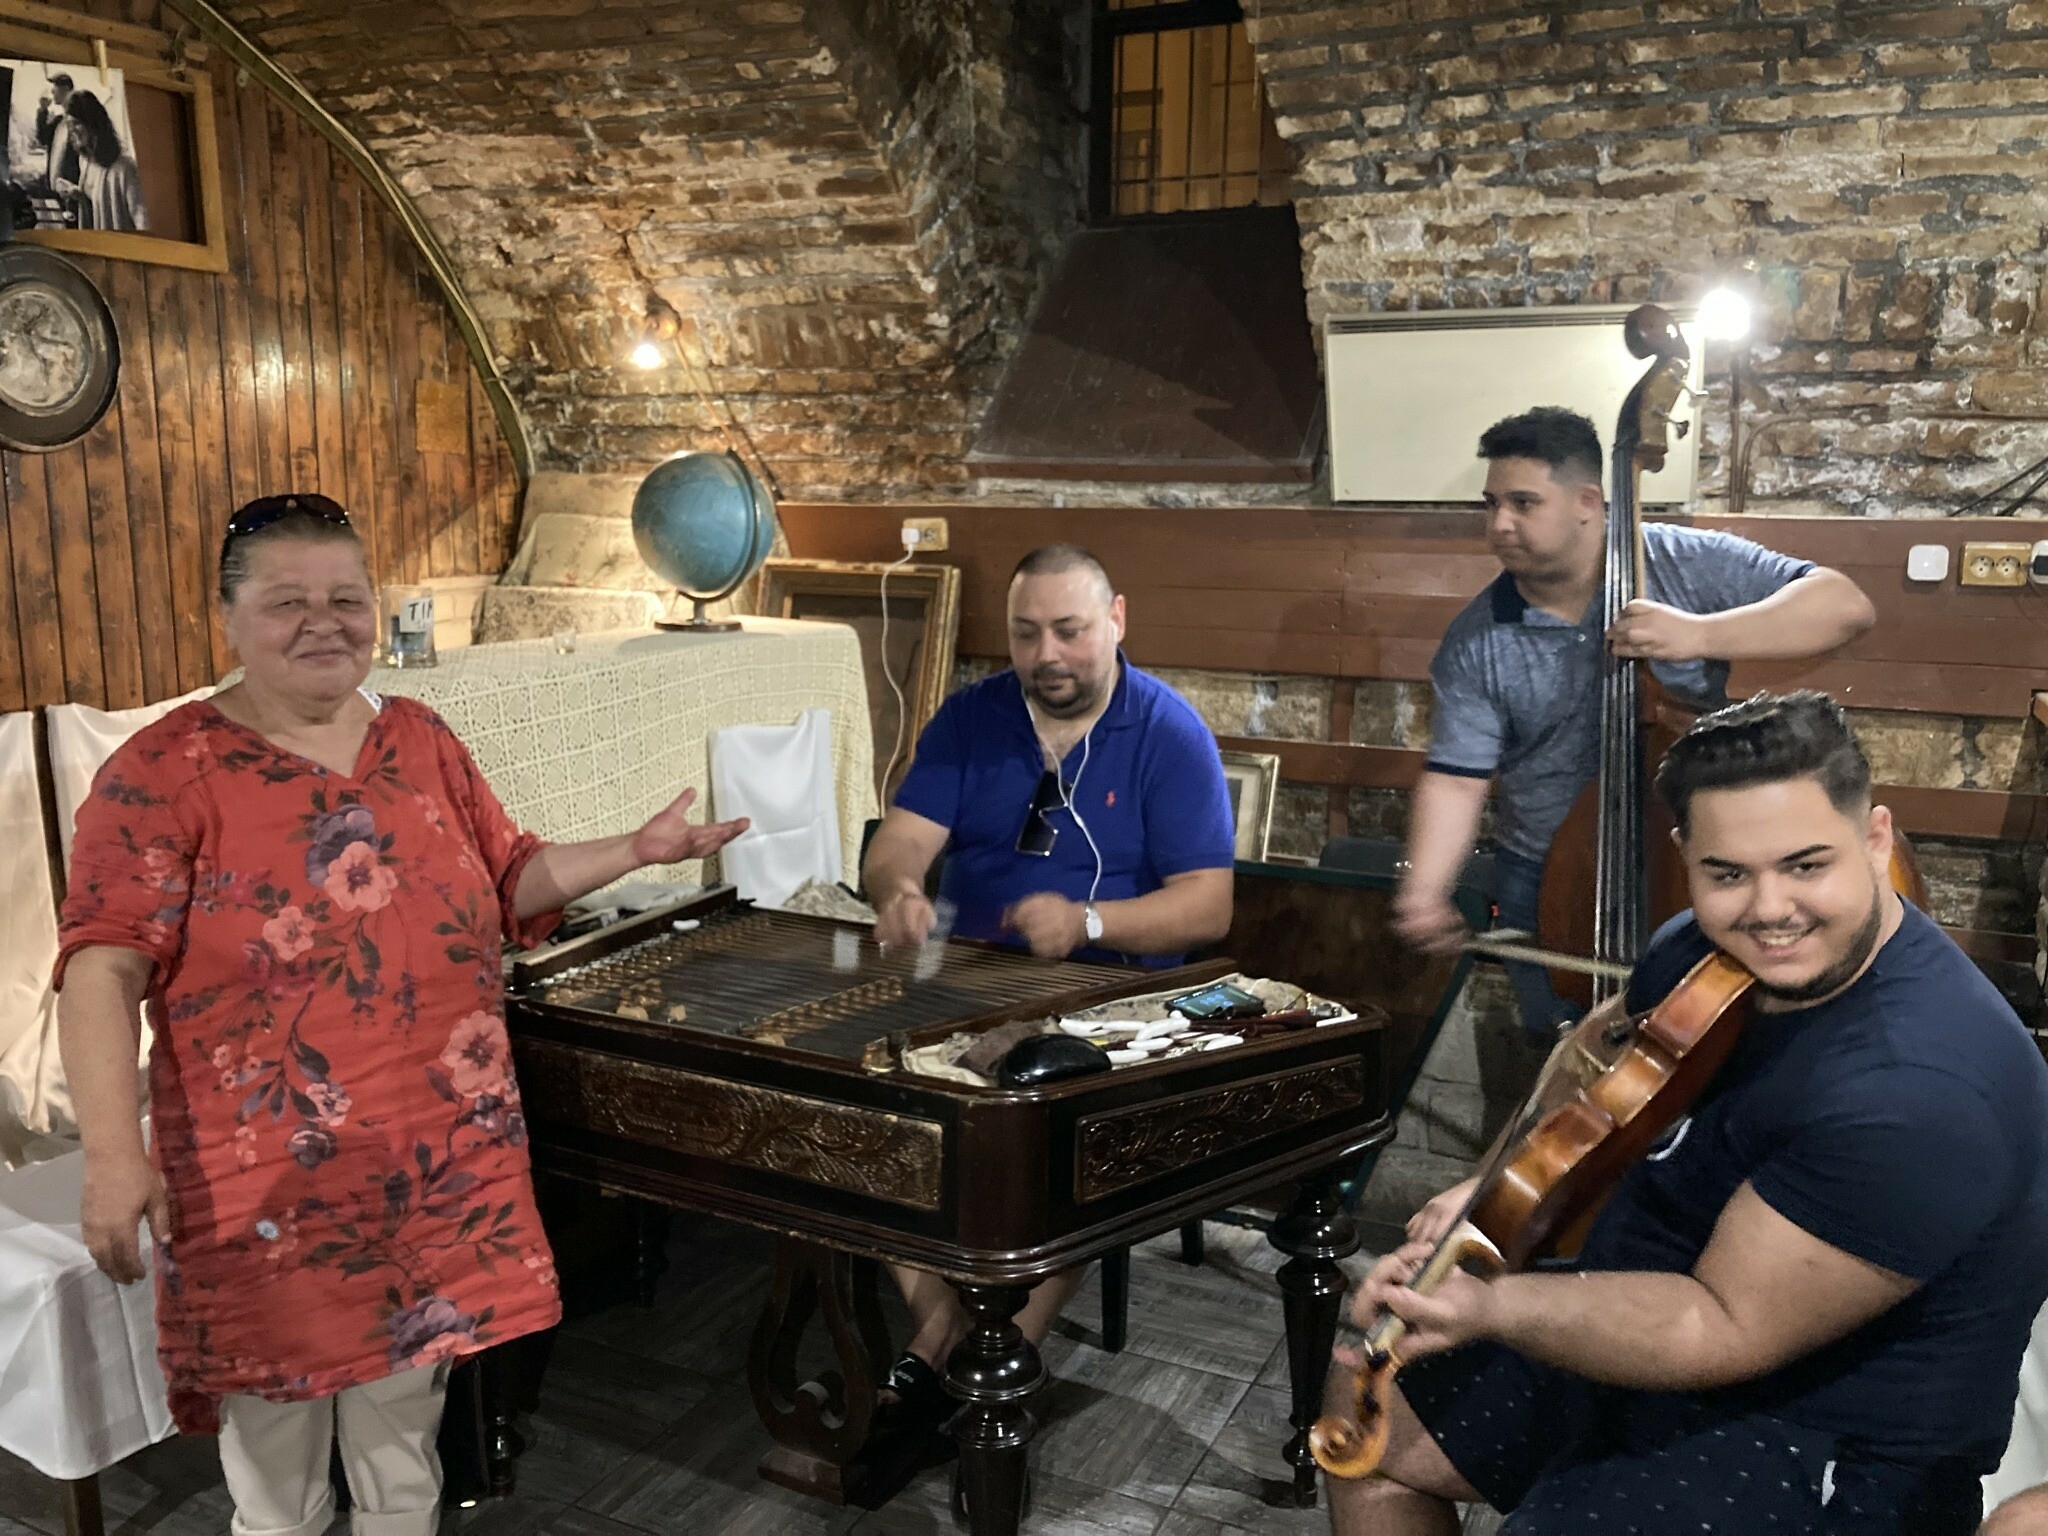 In Budapest, an underground Gypsy music scene plays Jewish bands